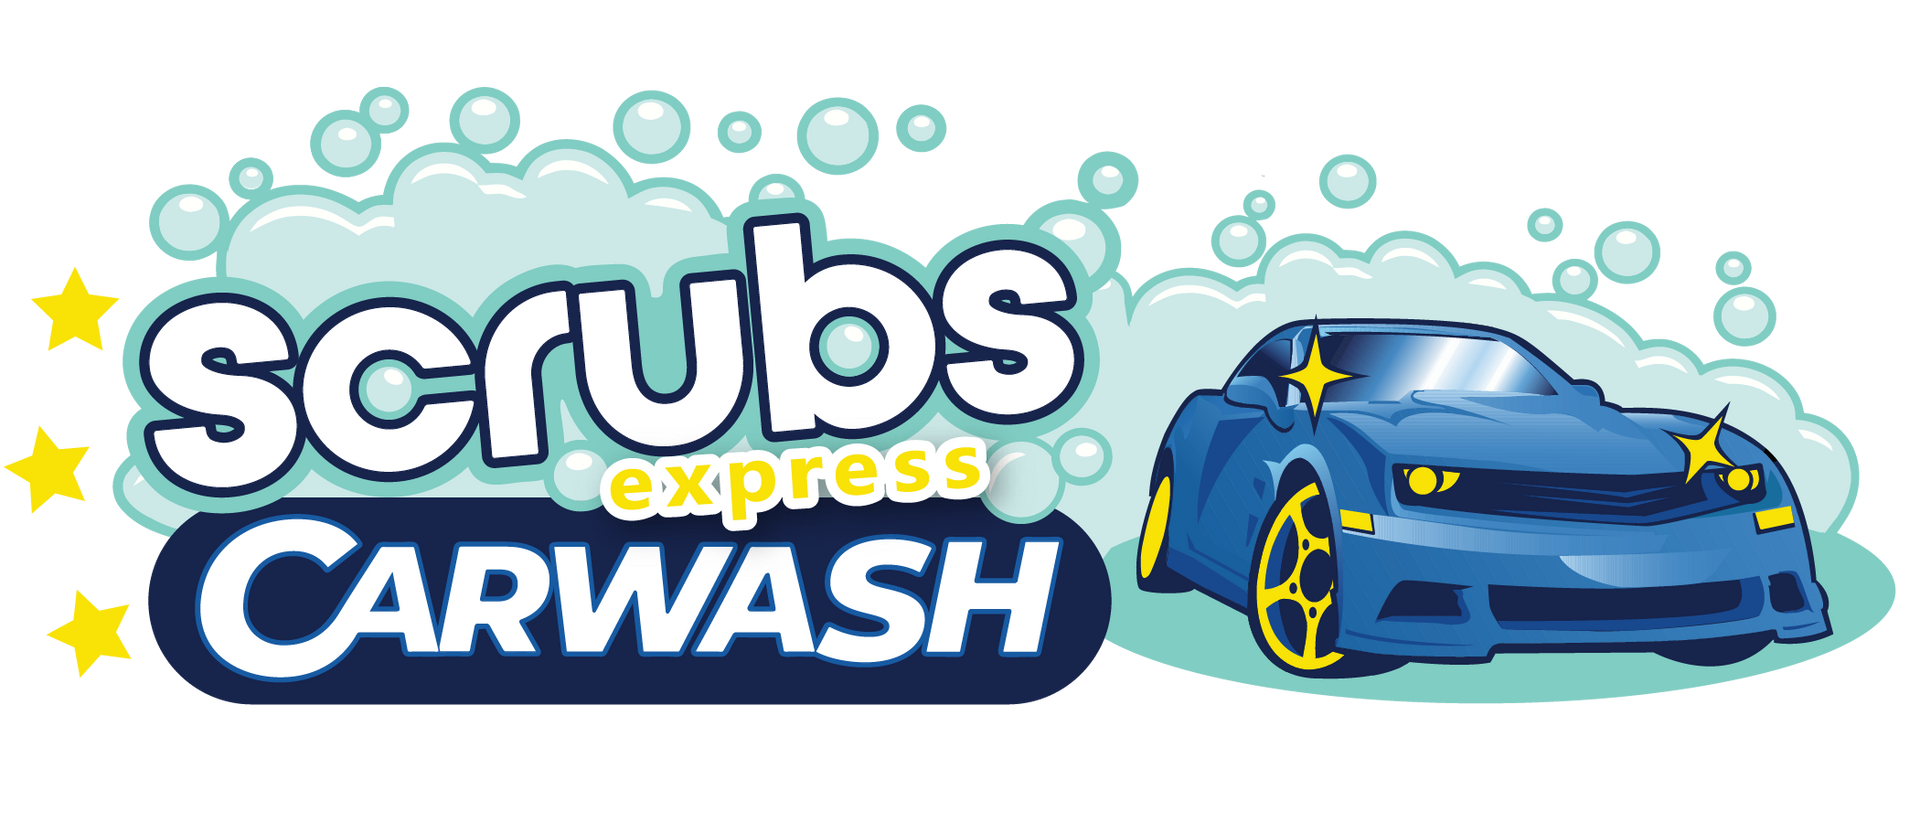 scrubs carwash in atlanta georgia logo